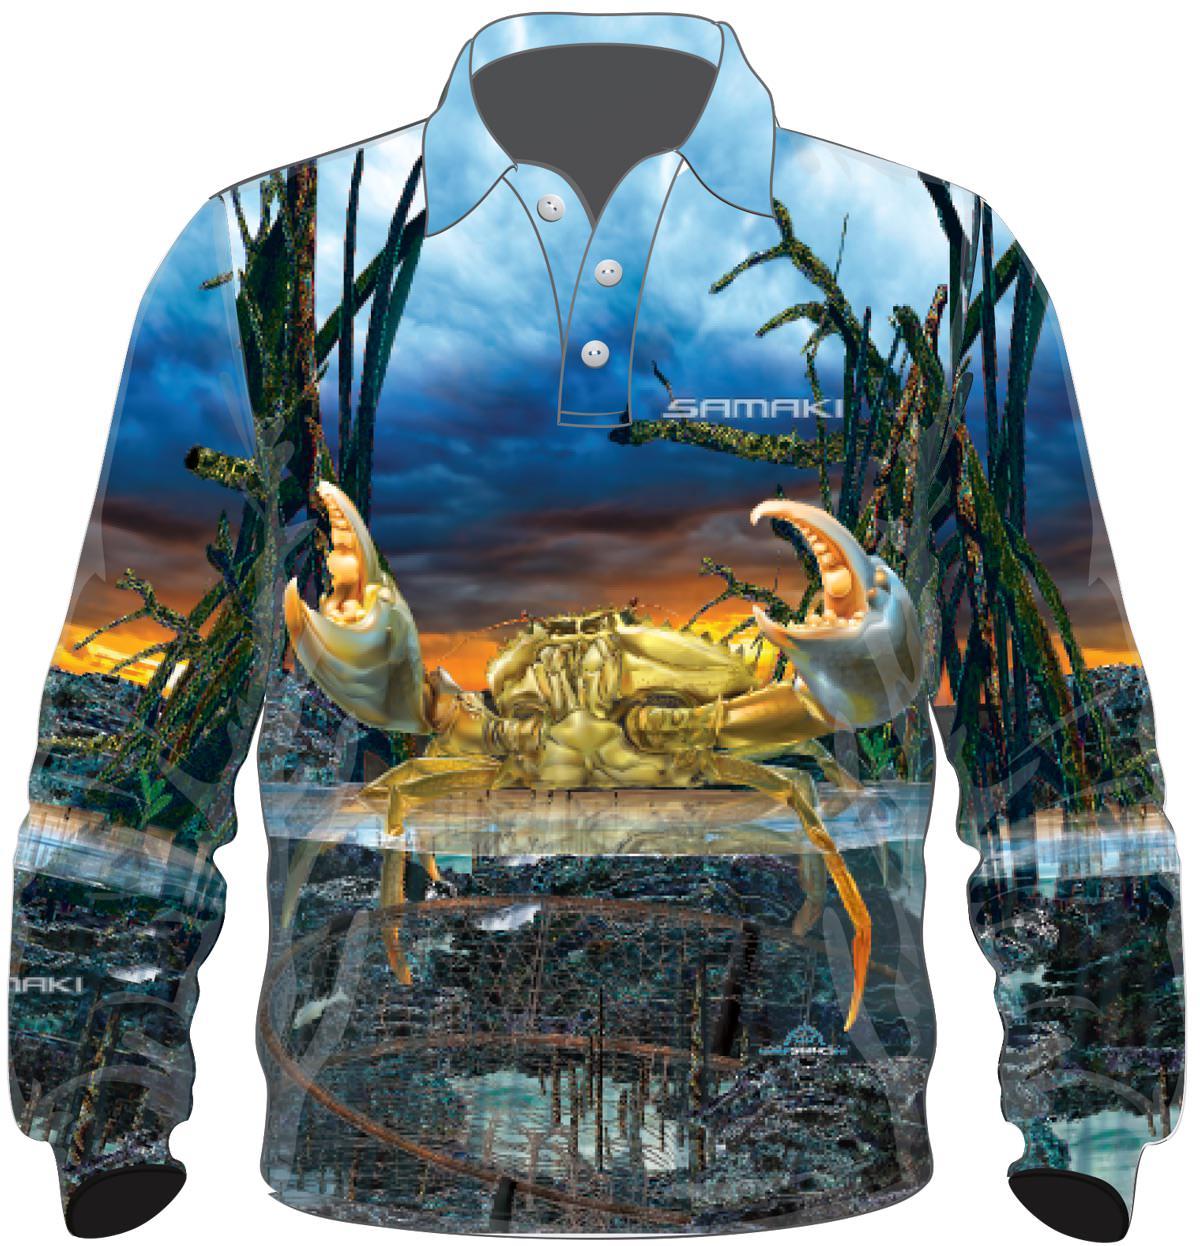 Samaki Dreamtime Long Sleeve Fishing Shirt – (Kids) Size 12